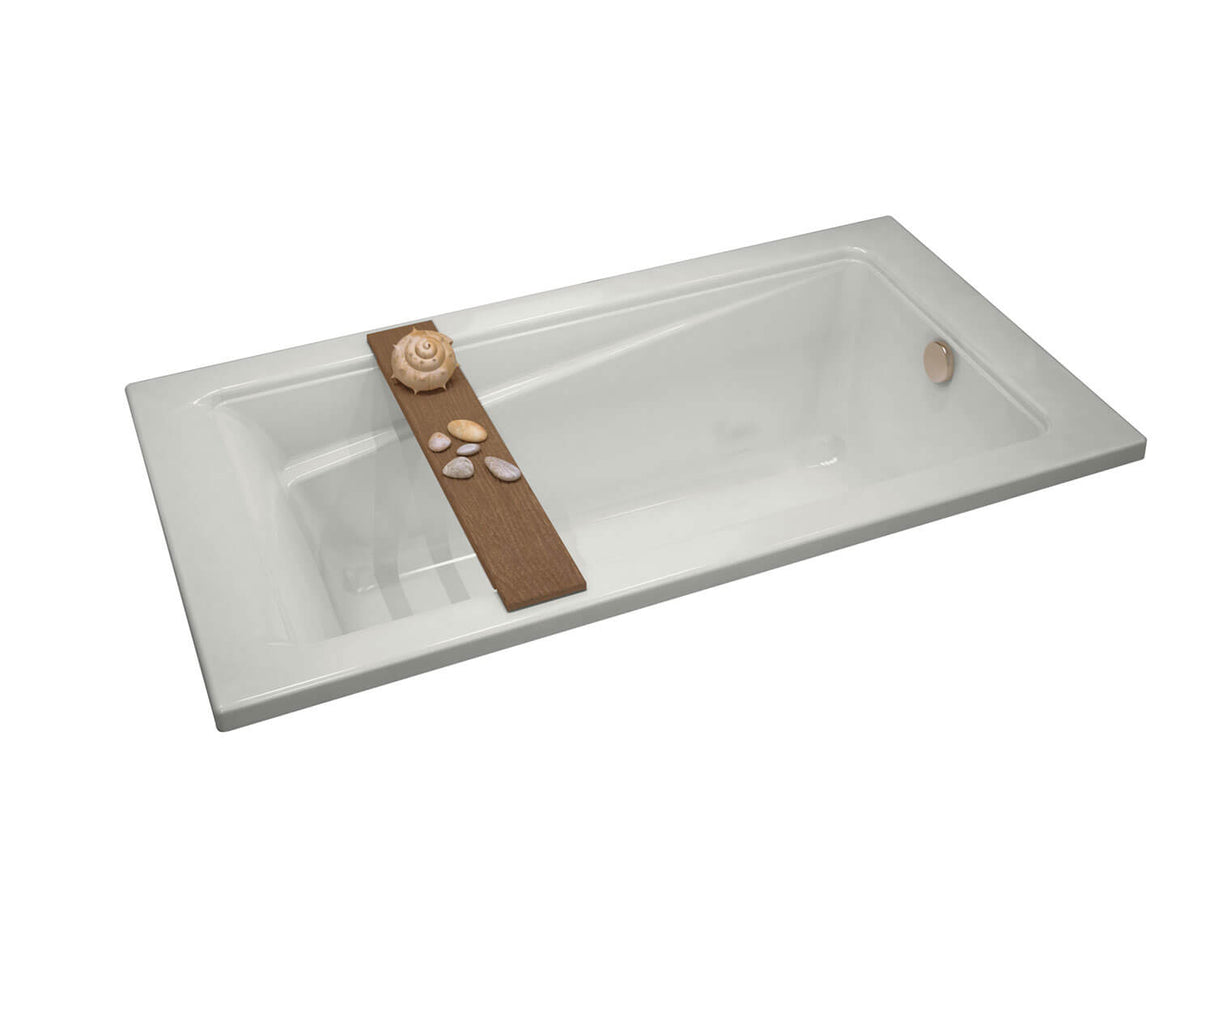 MAAX 105513-103-001-100 Exhibit 6032 Acrylic Drop-in End Drain Aeroeffect Bathtub in White